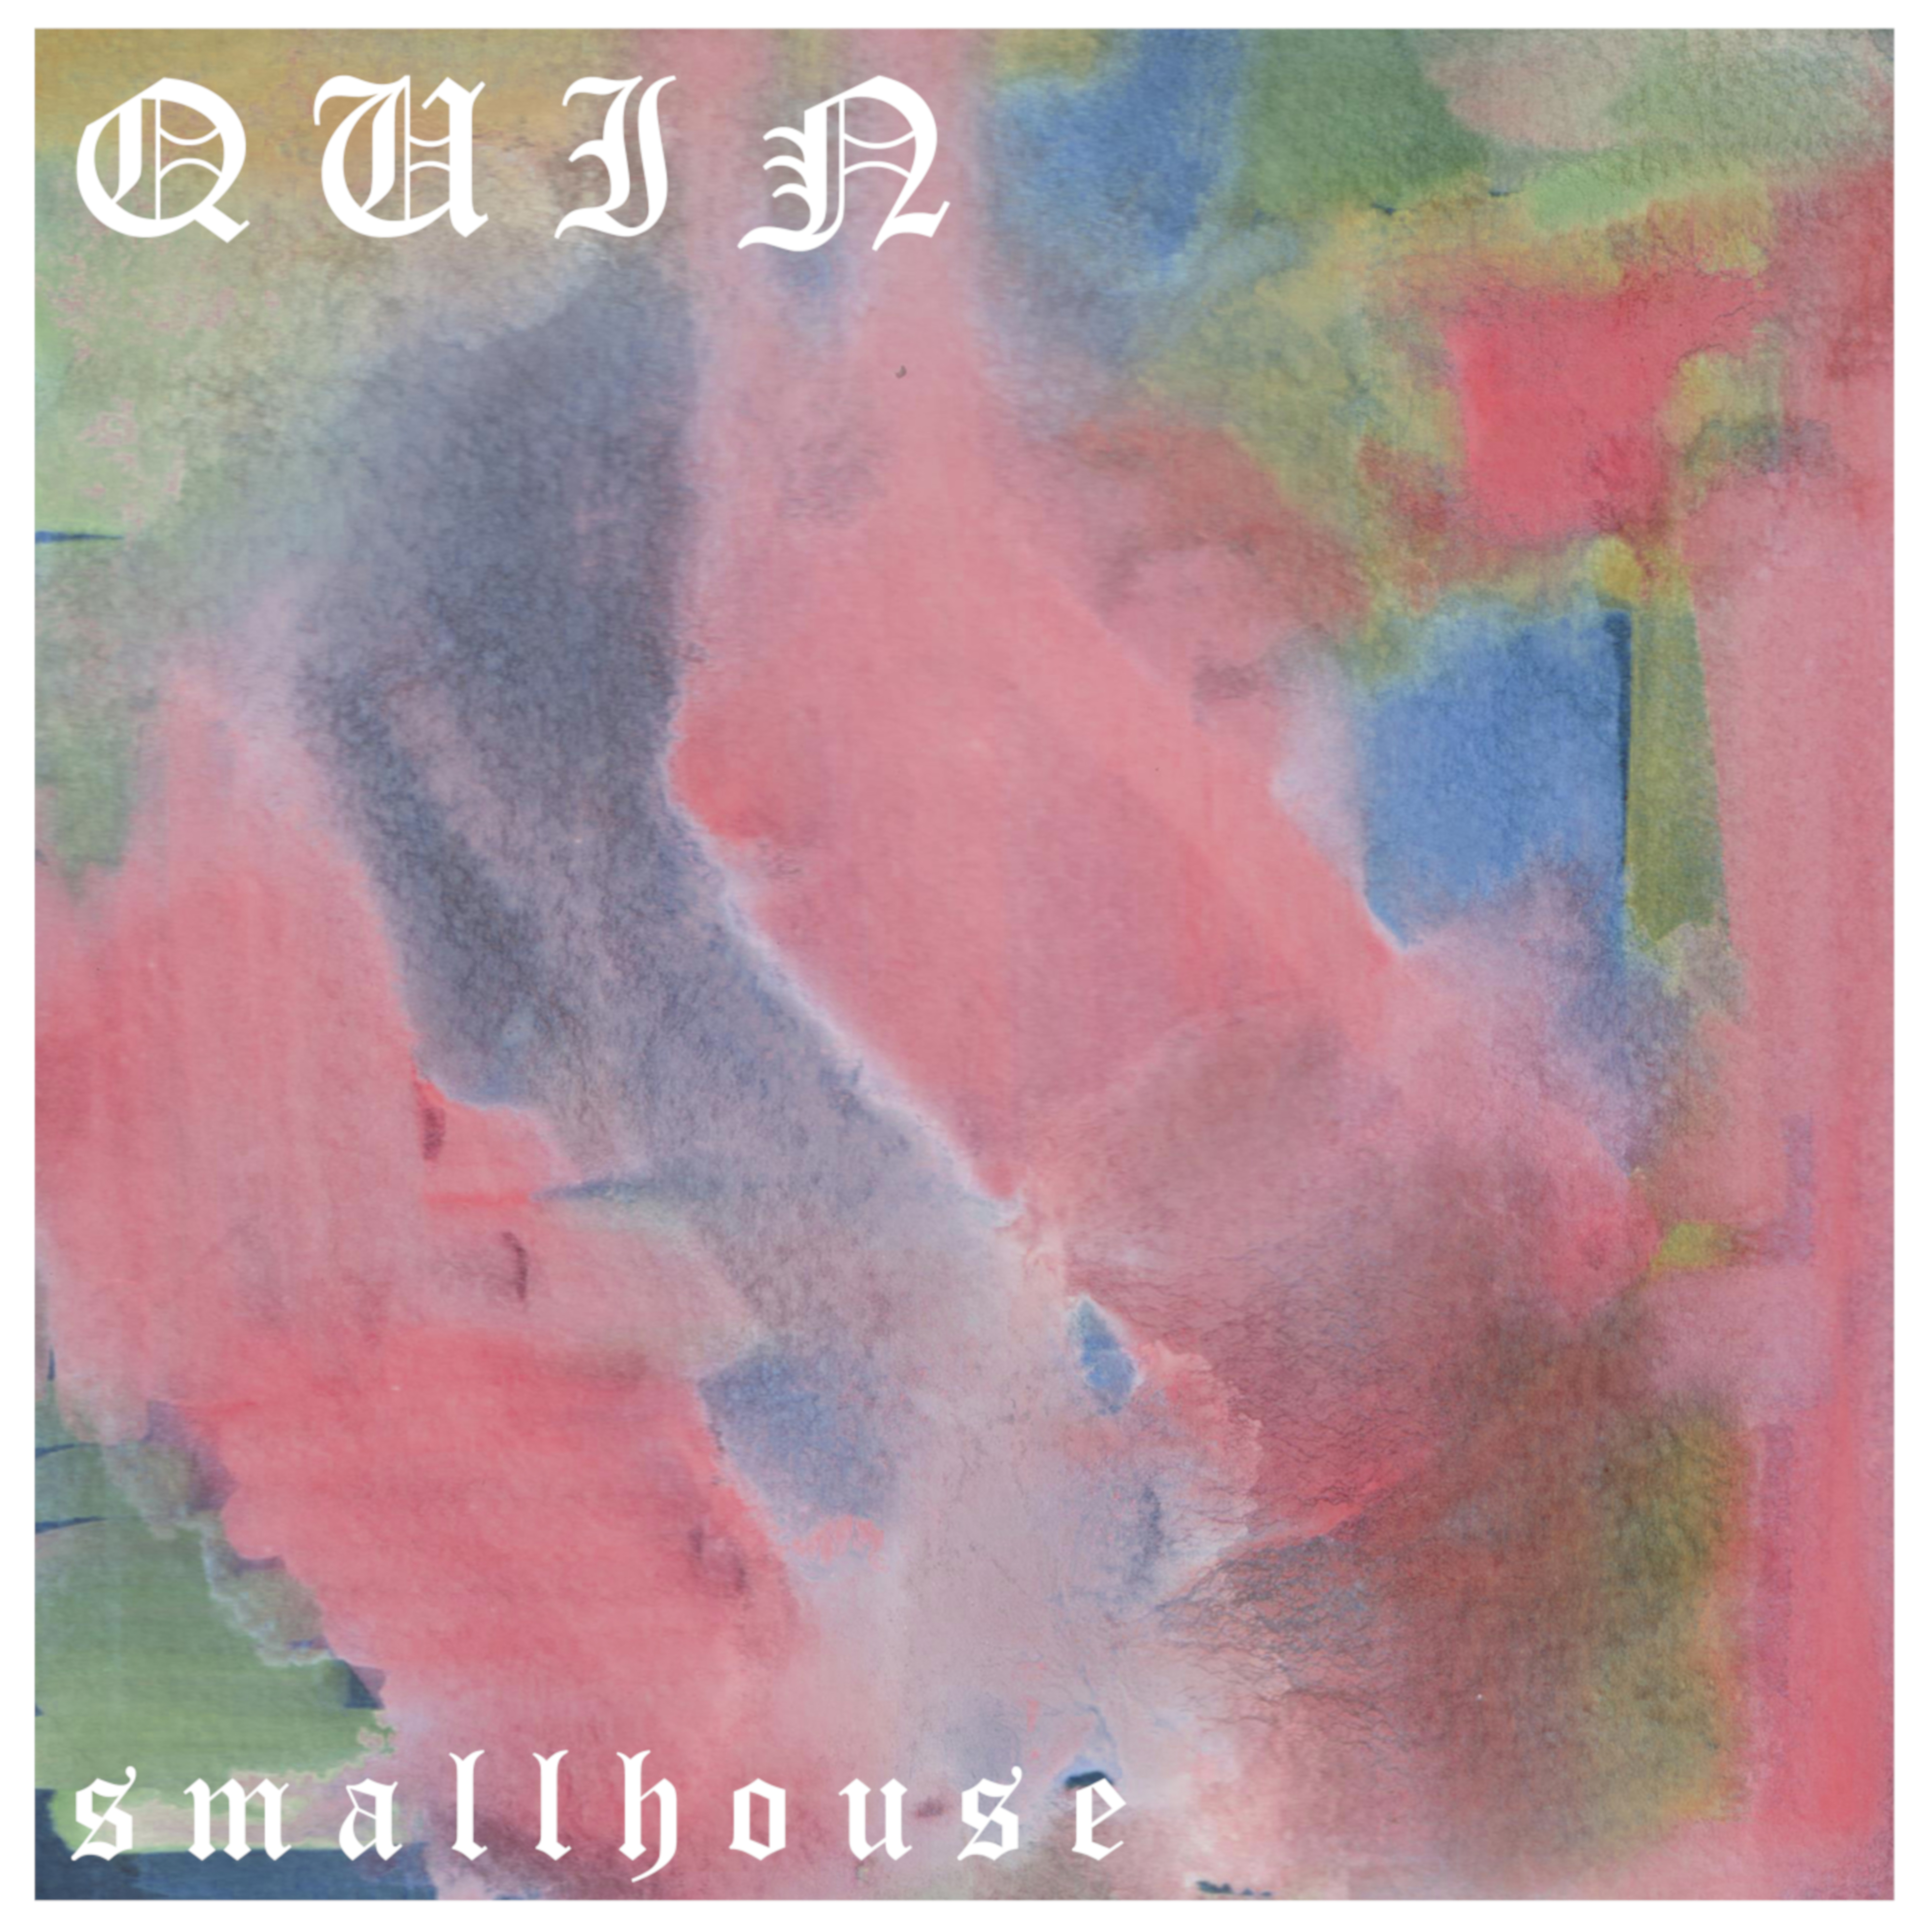 Smallhouse